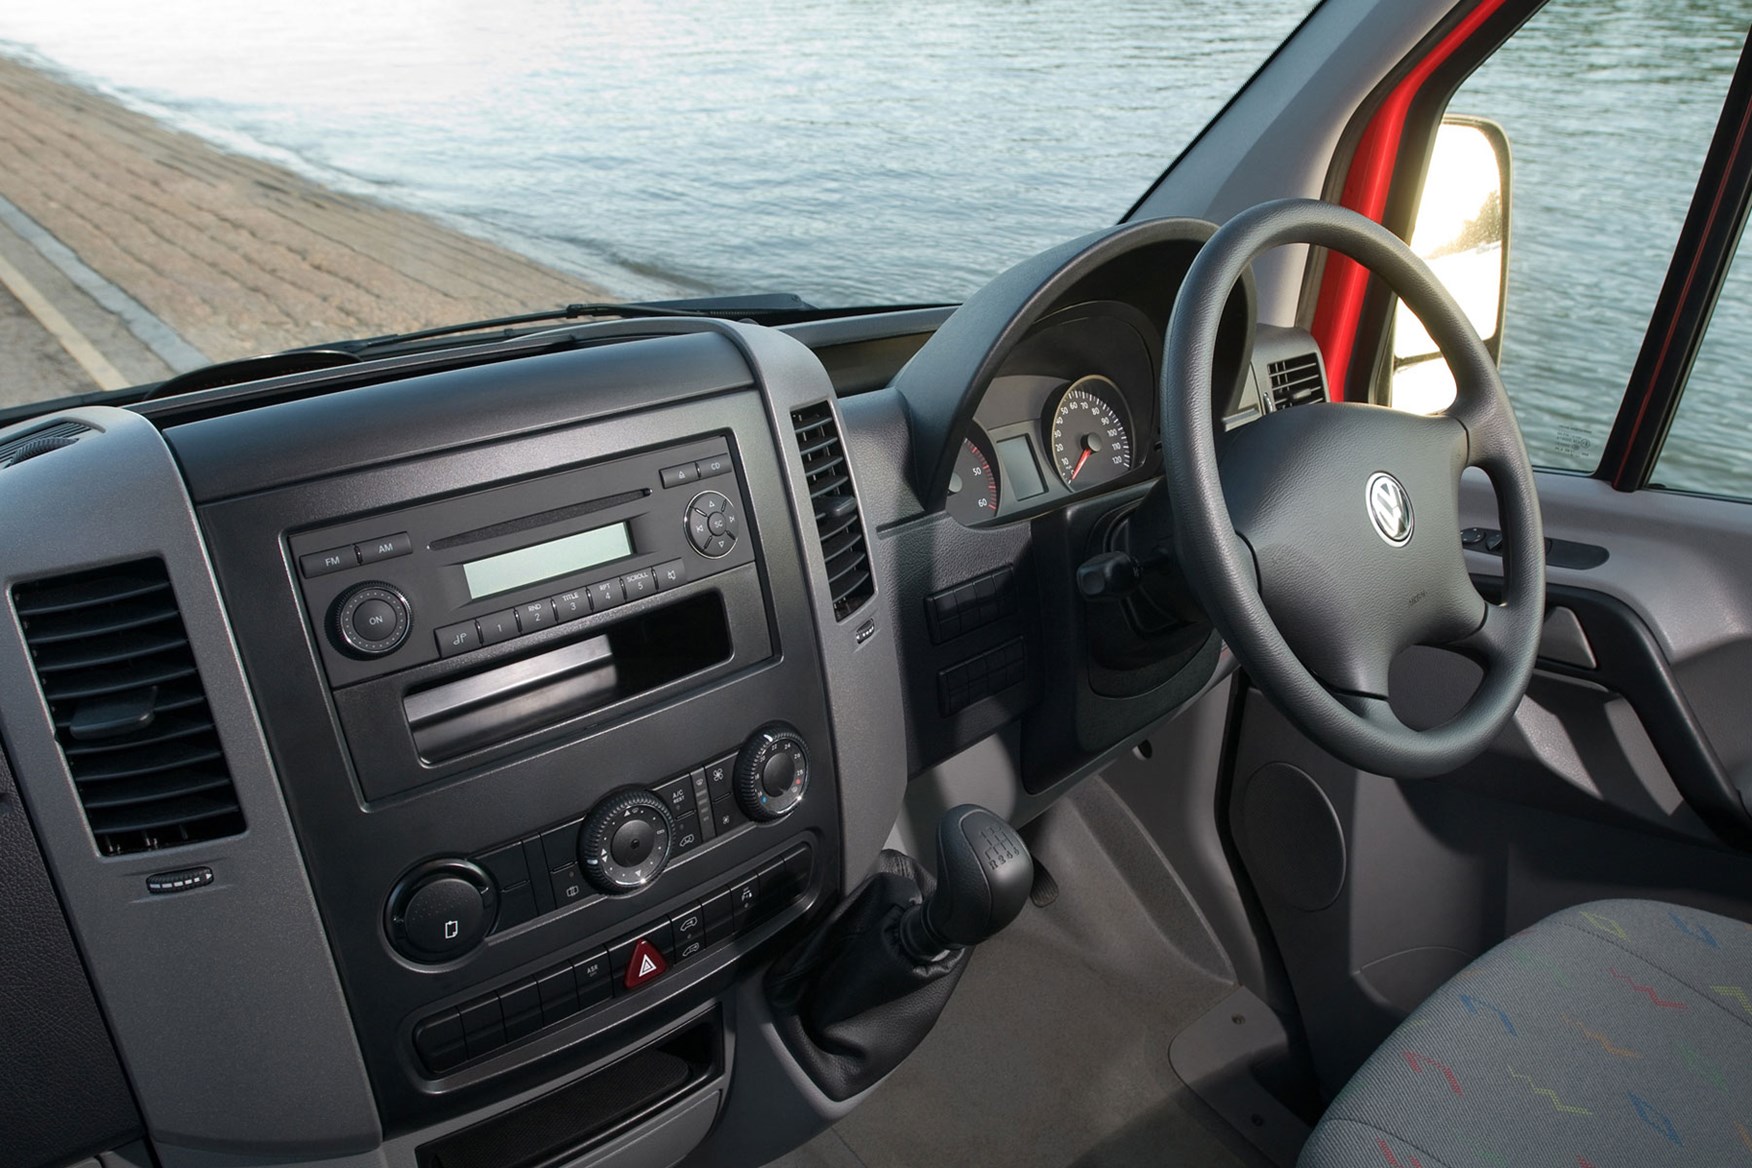 VW Crafter (1996-2003) cab interior